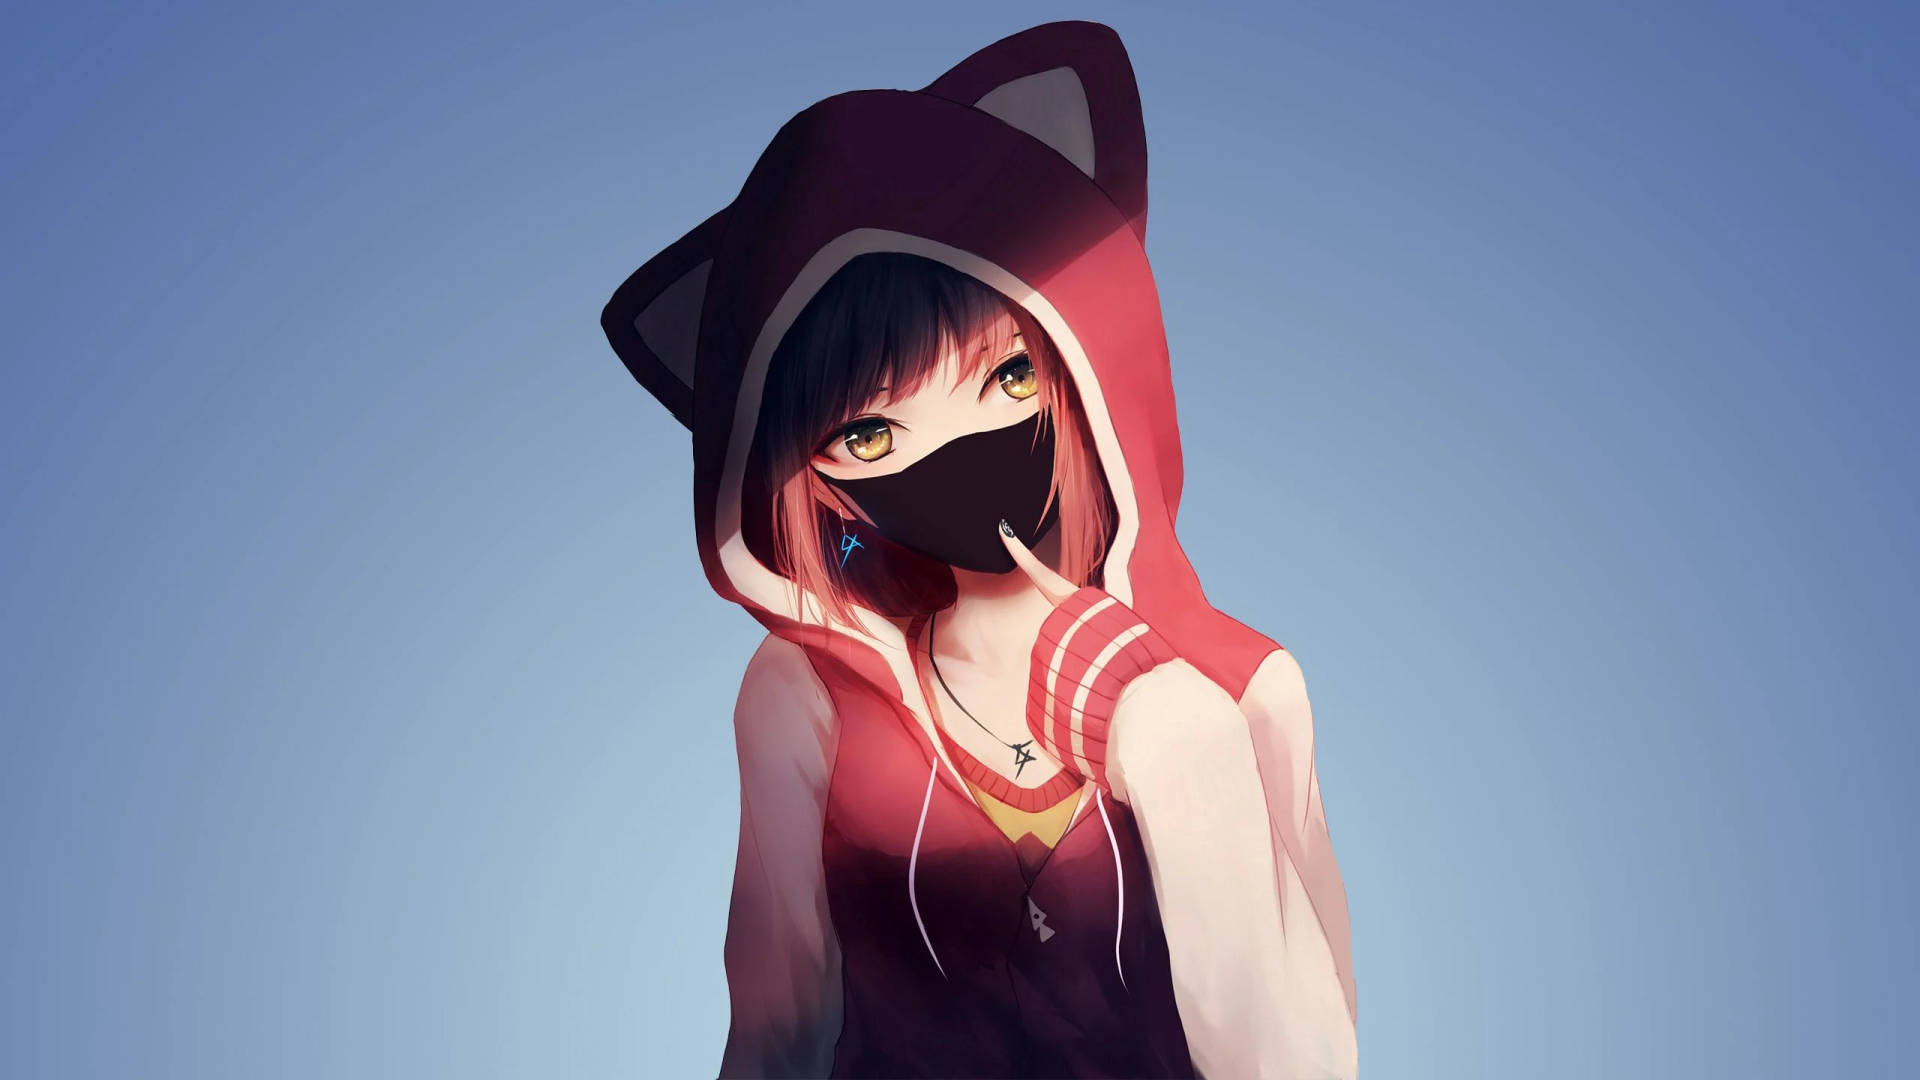 Anime Girl Hoodie With Black Mask Wallpaper